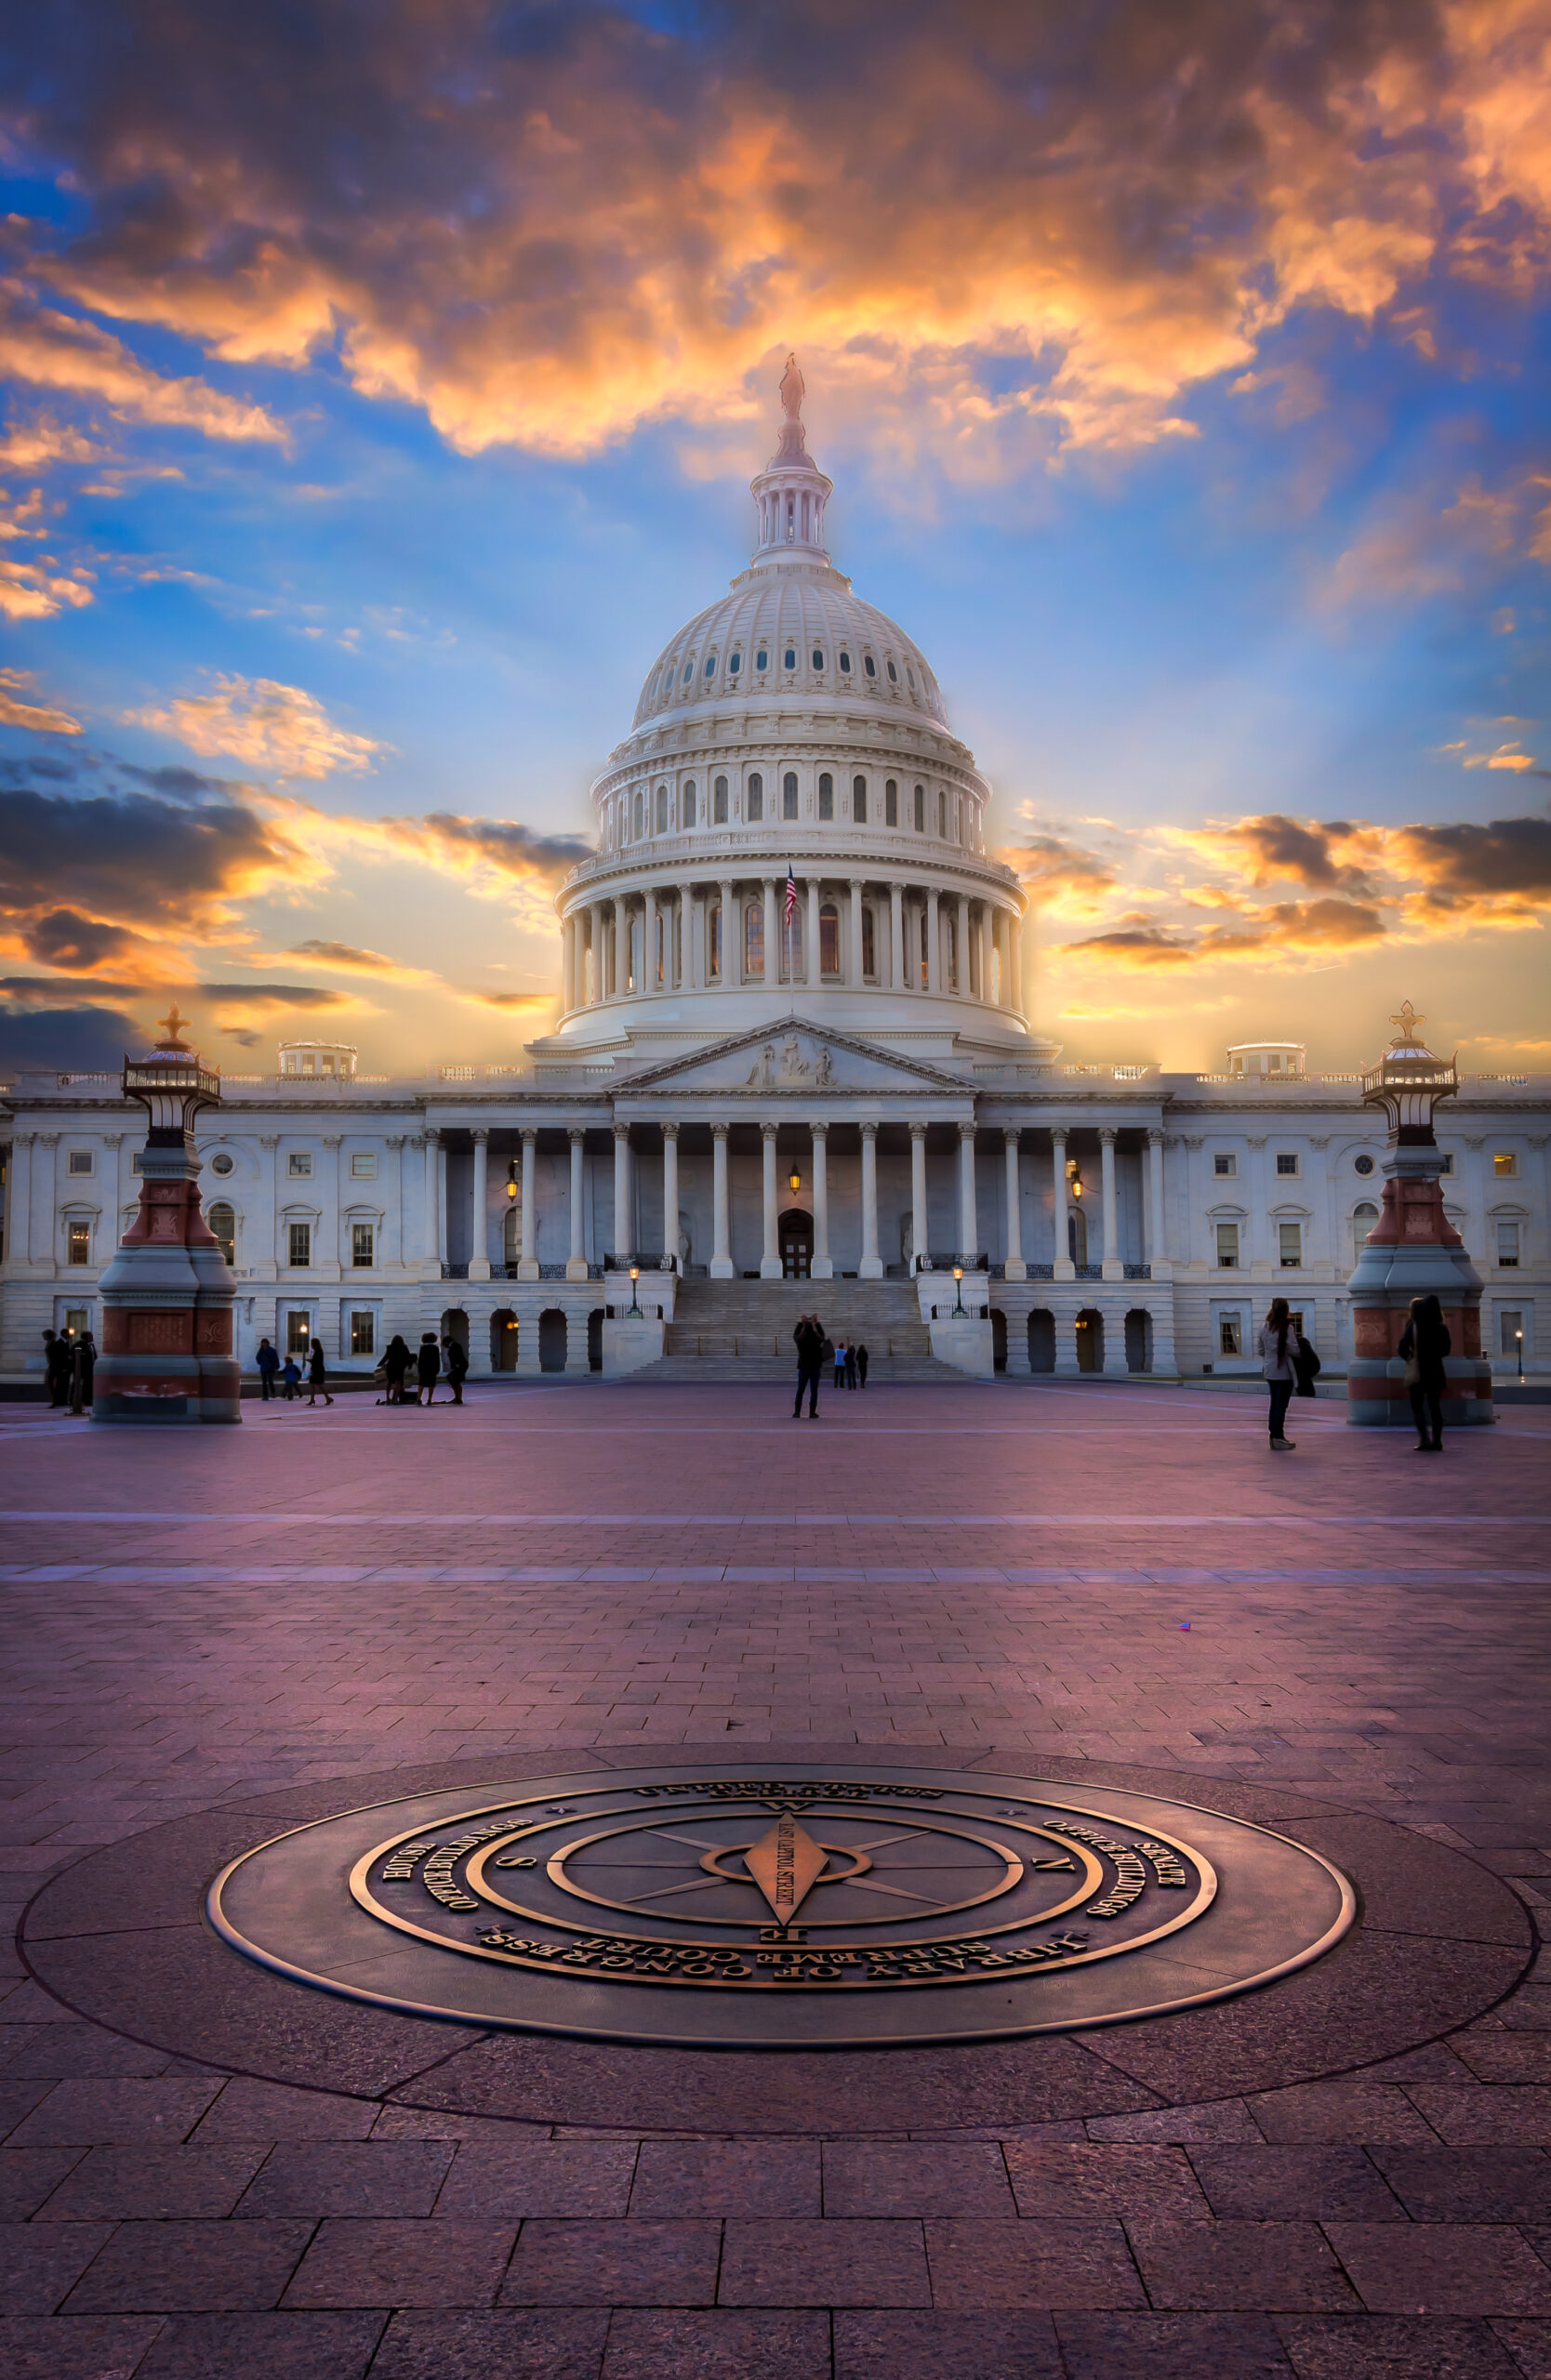 Golden light spills over the U.S. Capital building emblazing the Arc Of Washington.